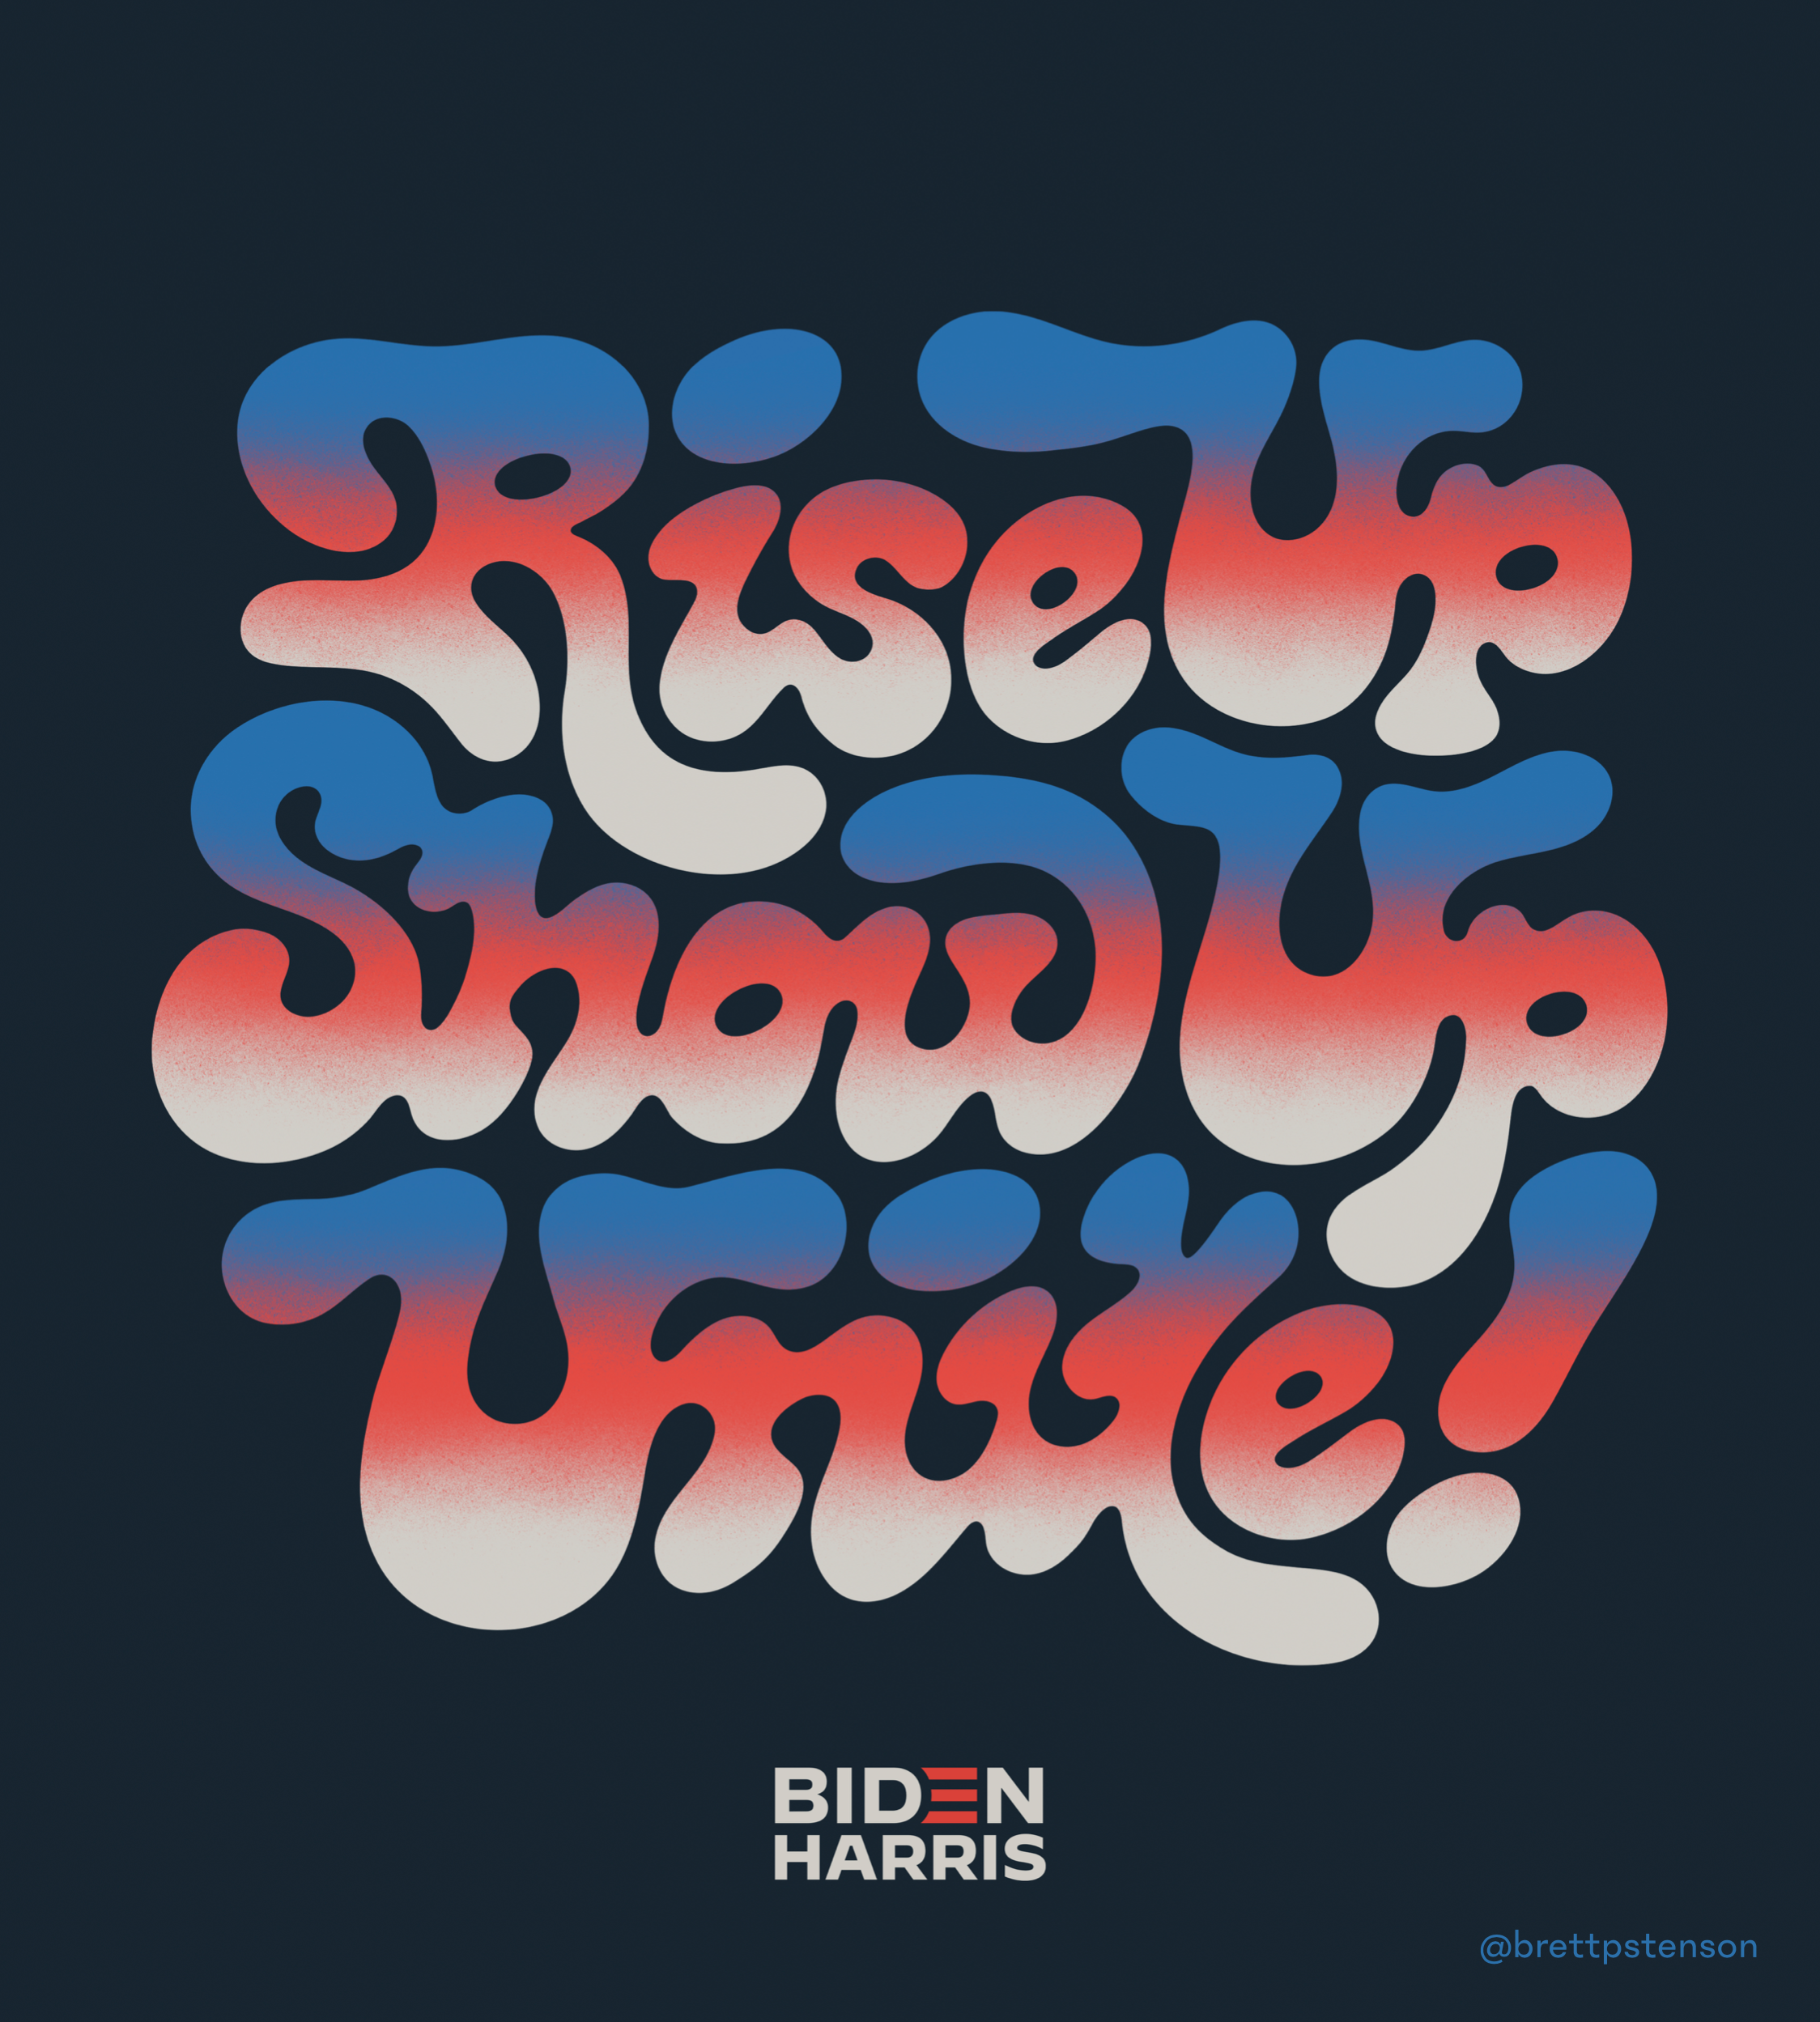 Lettering art of the phrase 'Rise up. Show up. Unite!' by Brett Stenson